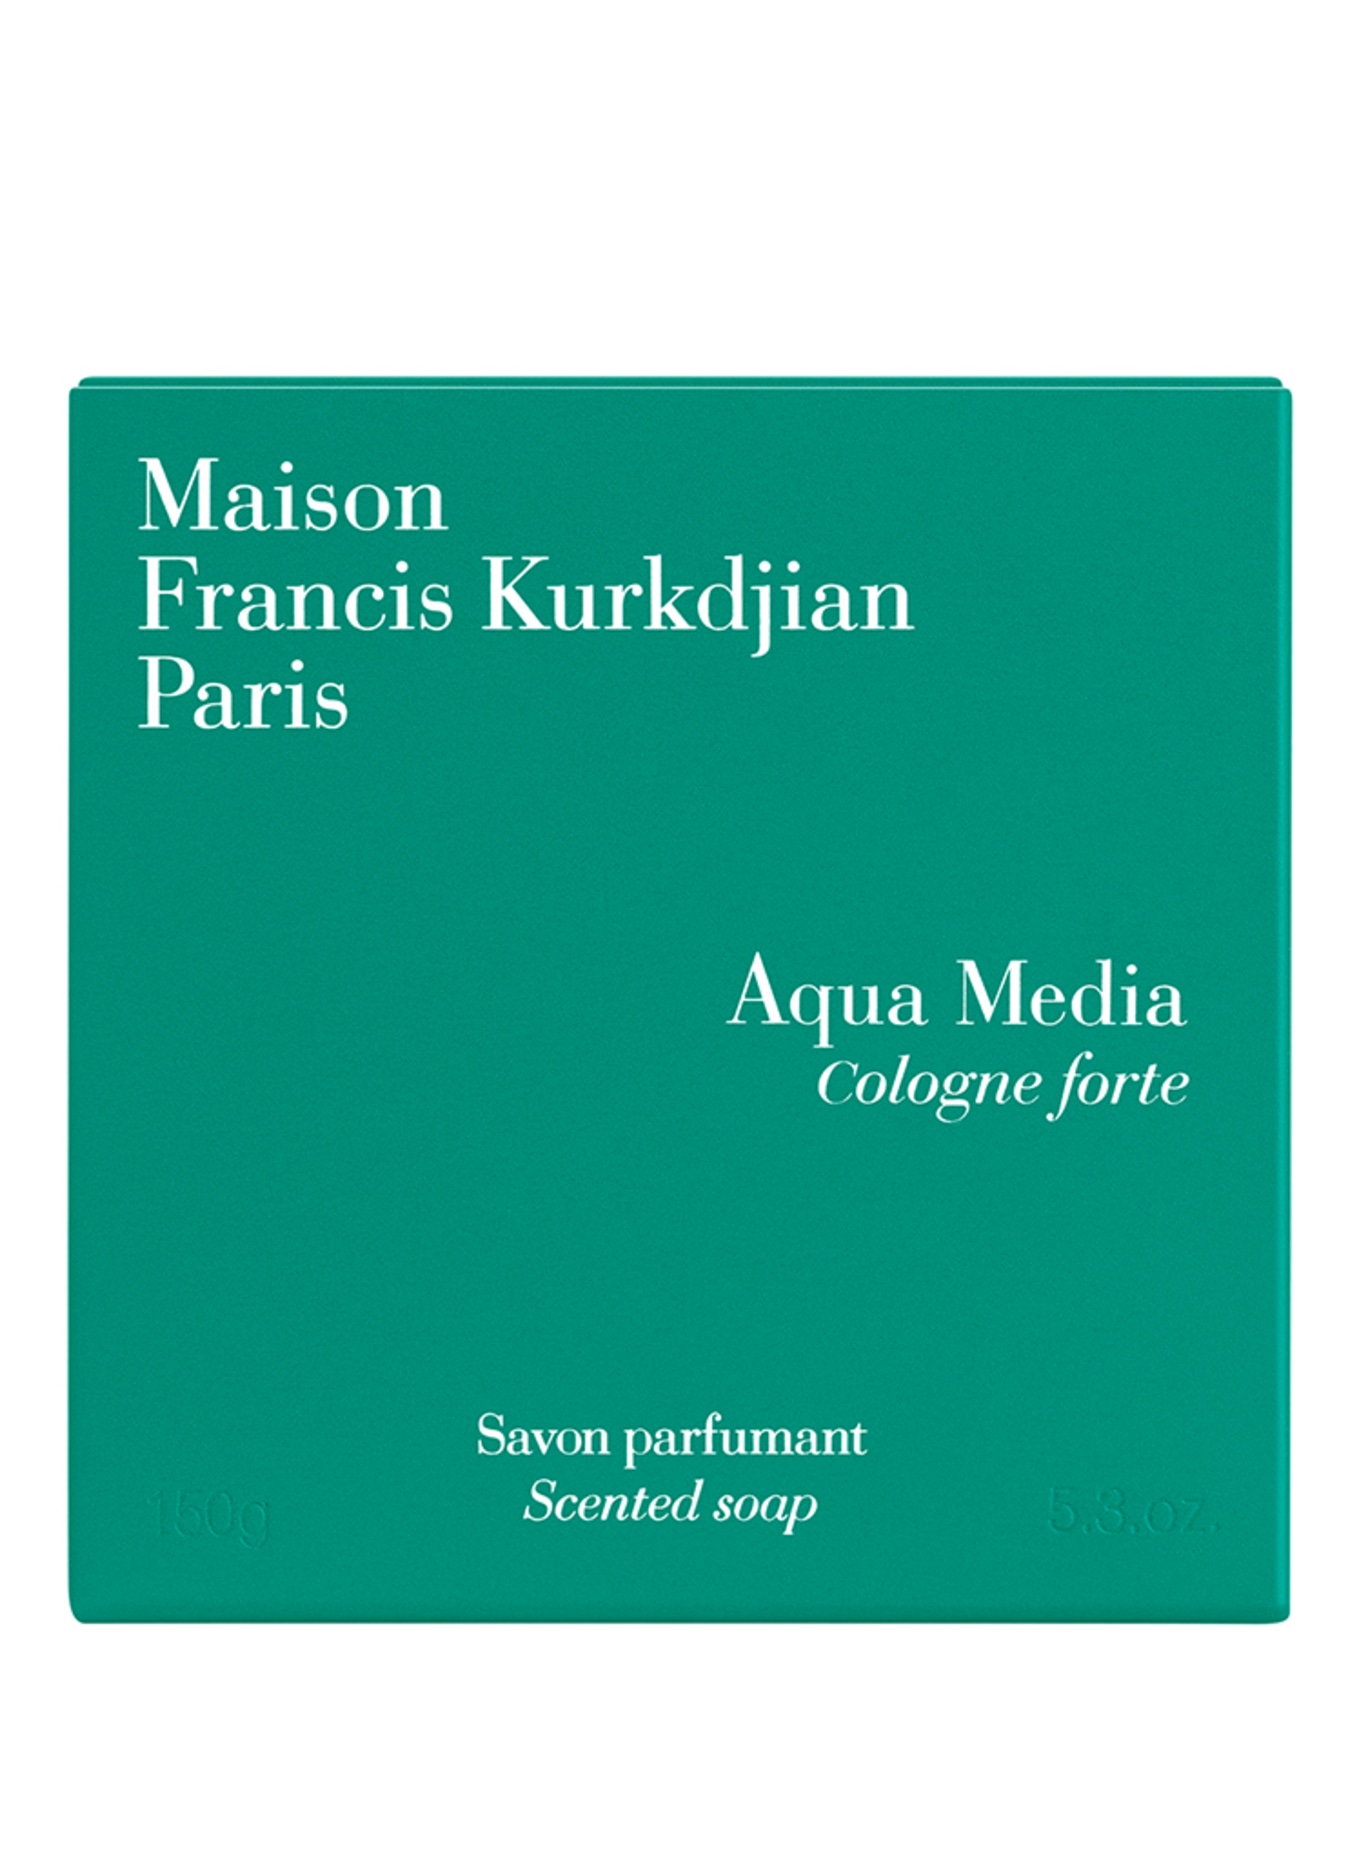 Maison Francis Kurkdjian Paris AQUA MEDIA COLOGNE FORTE (Obrázek 2)